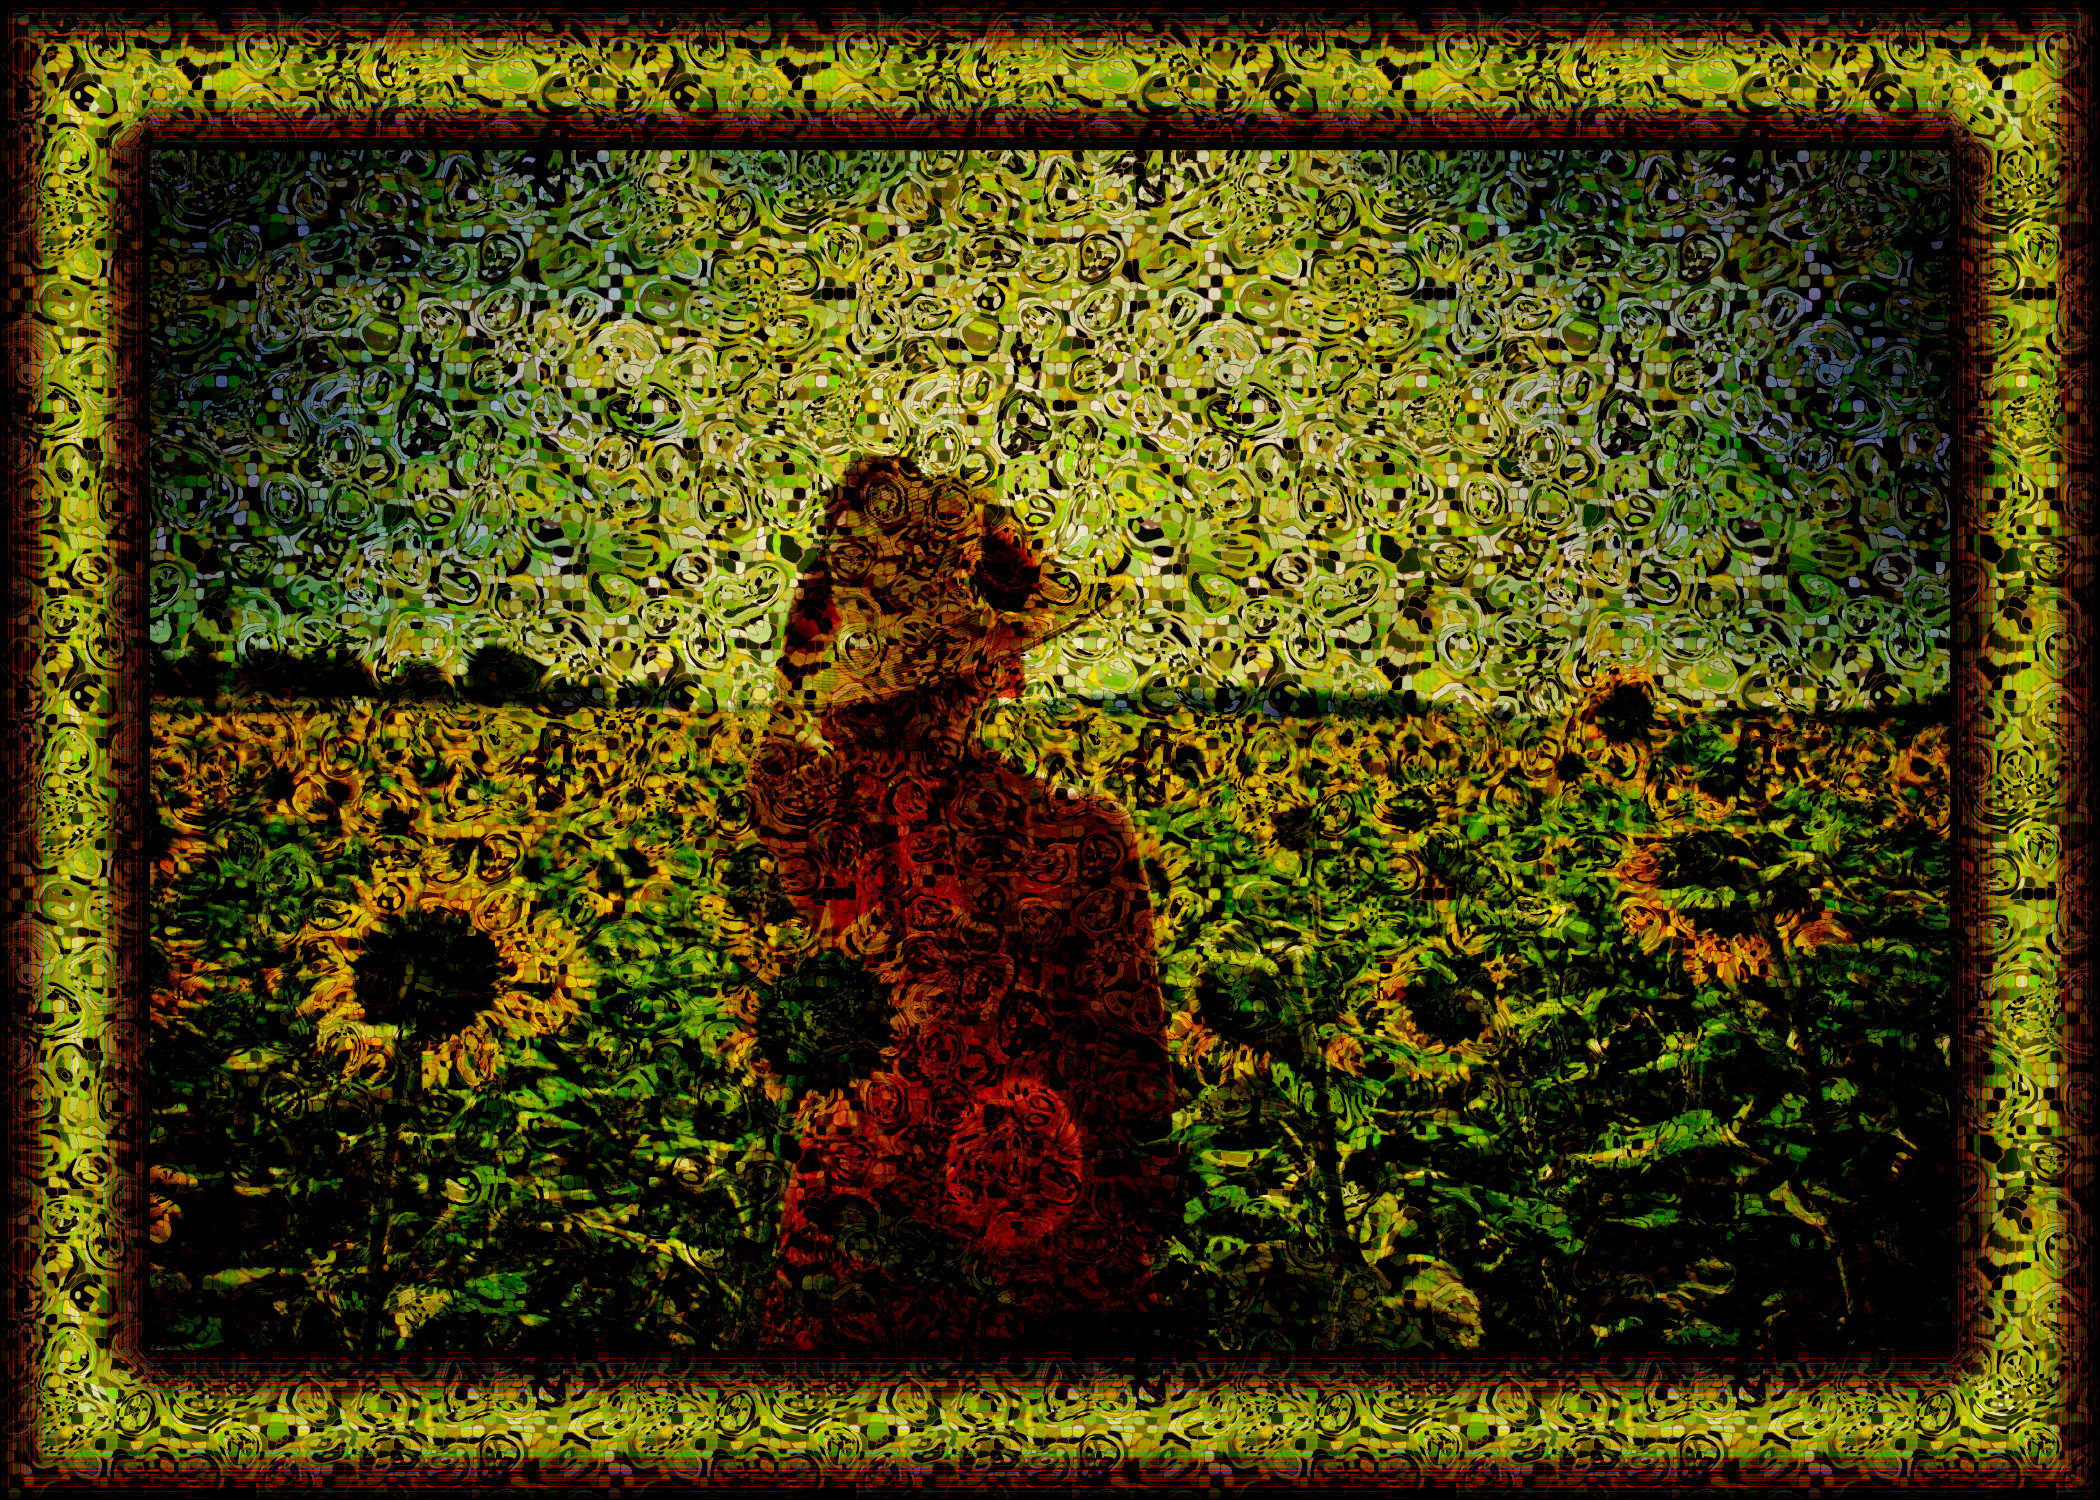 2019-03-21 10-45-26 sunflowers-3640935_1920, using FPS26, on 30 areas, divertissement.jpg